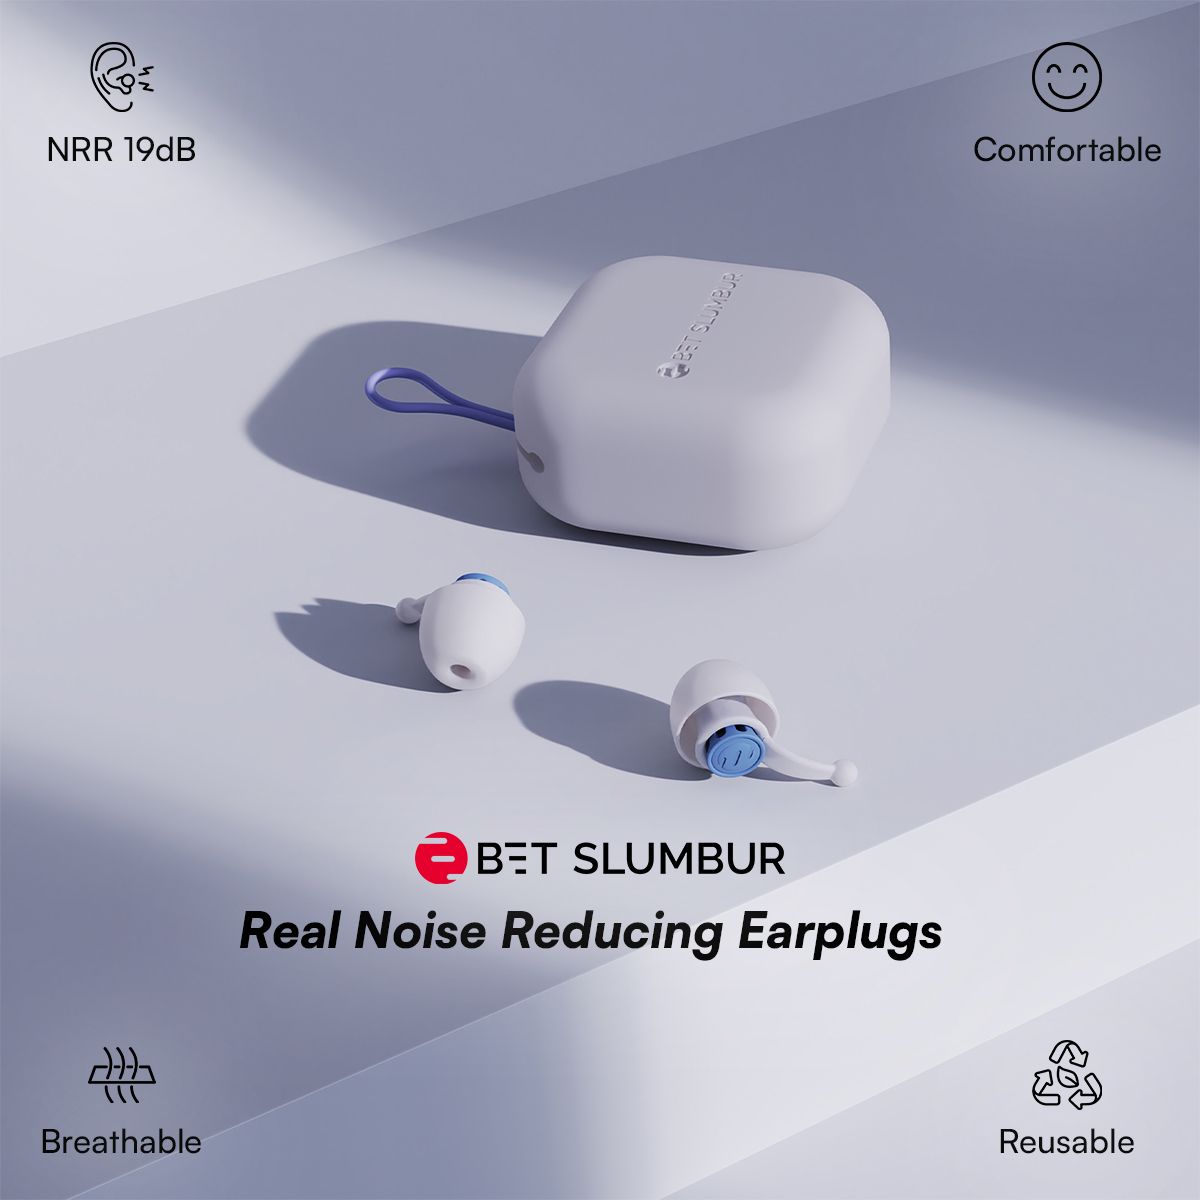 BET SLUMBUR Introduces Groundbreaking Noise Reducing Earplugs on Kickstarter A Leap Forward in Auditory Health